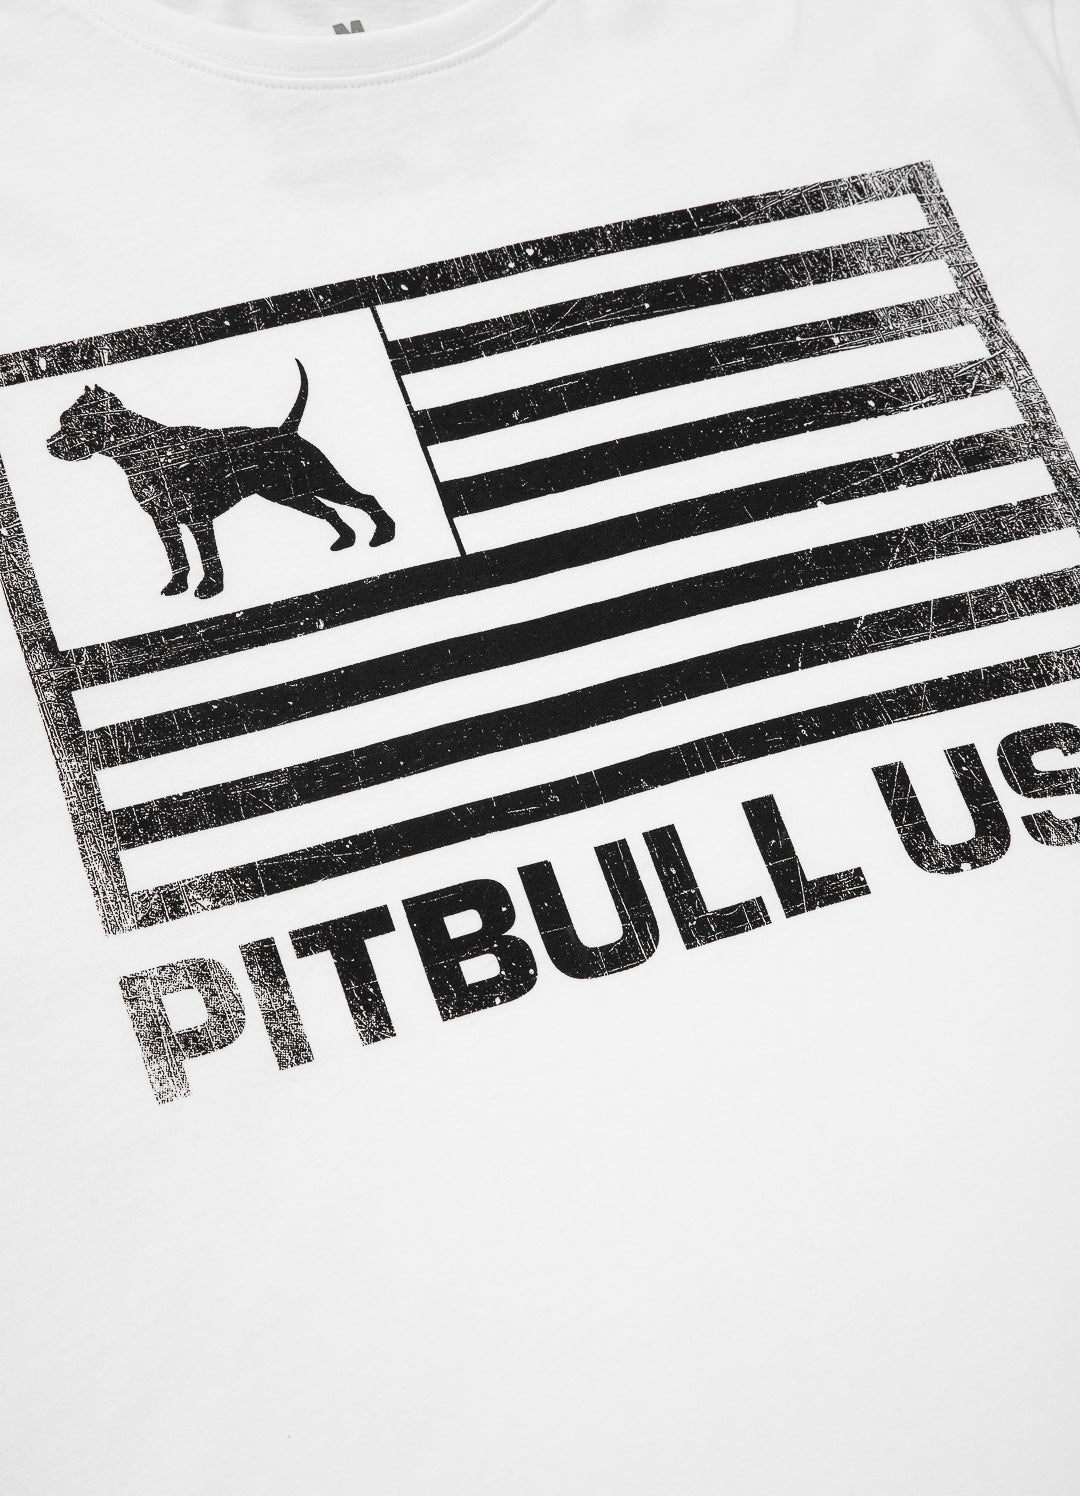 T-shirt PITBULL USA 160 GSM White - Pitbull West Coast International Store 